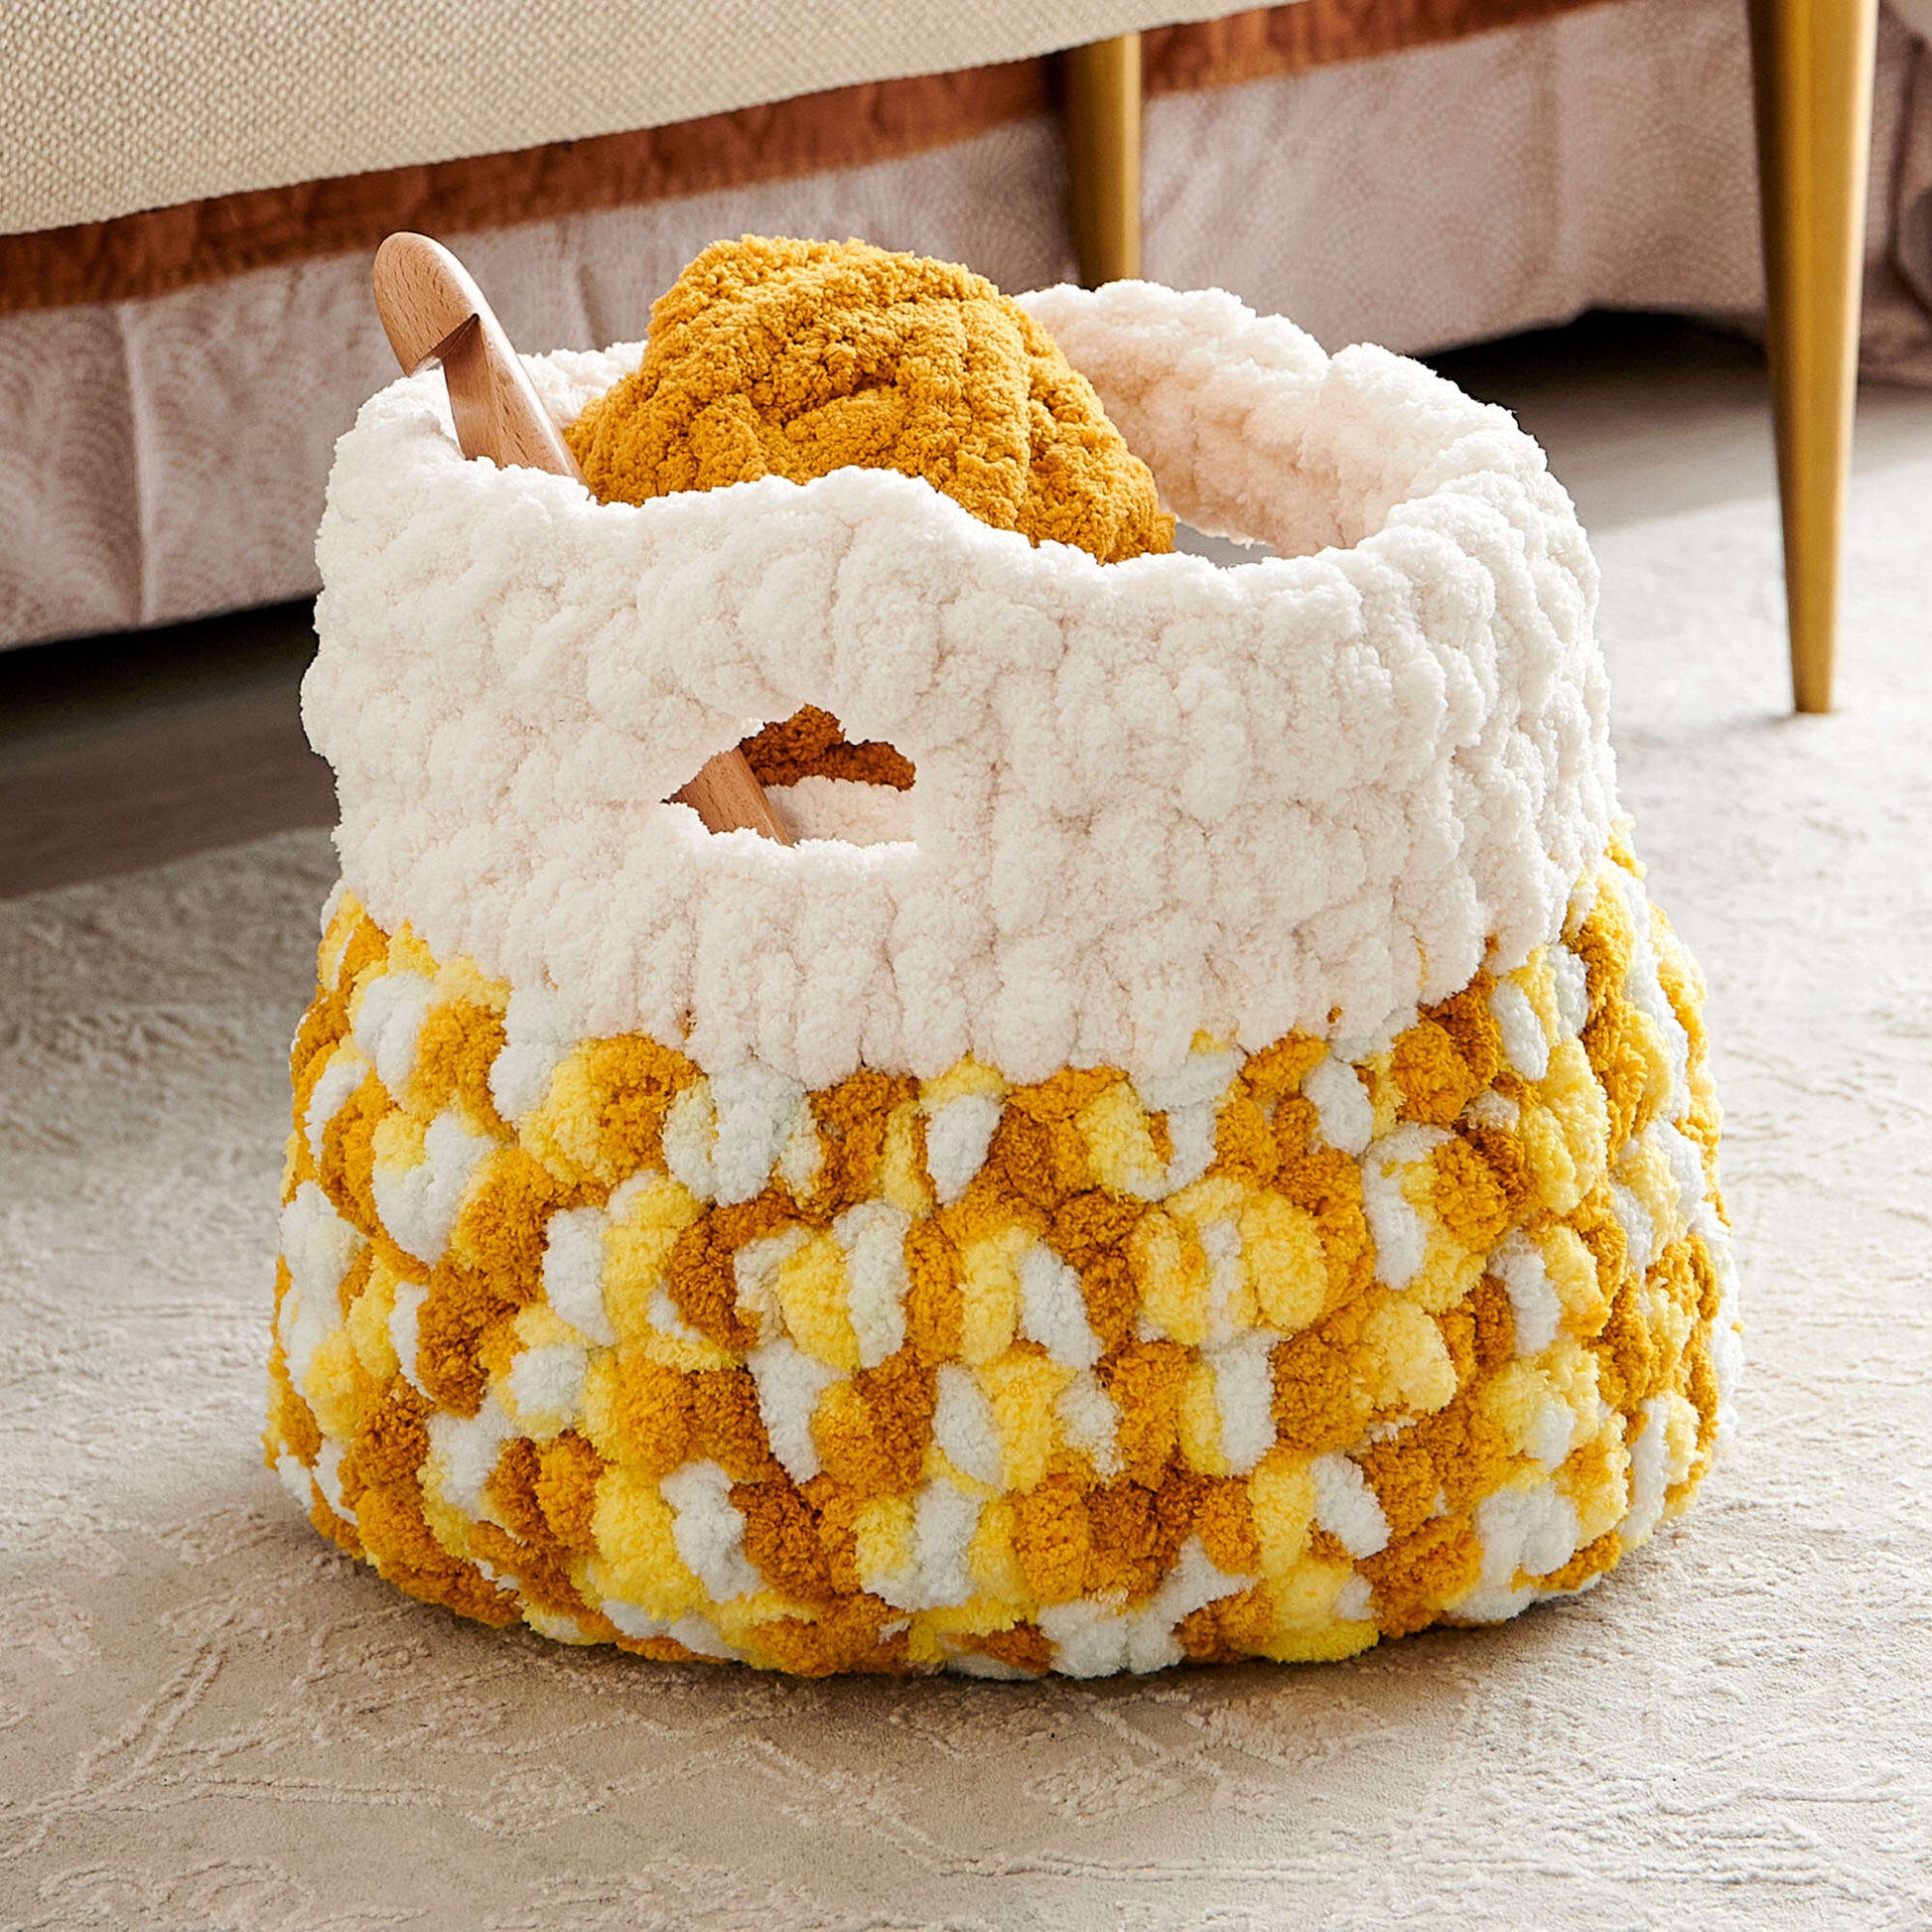 How To Make Bernat Blanket Extra Thick Square Bottom Crochet Basket Online